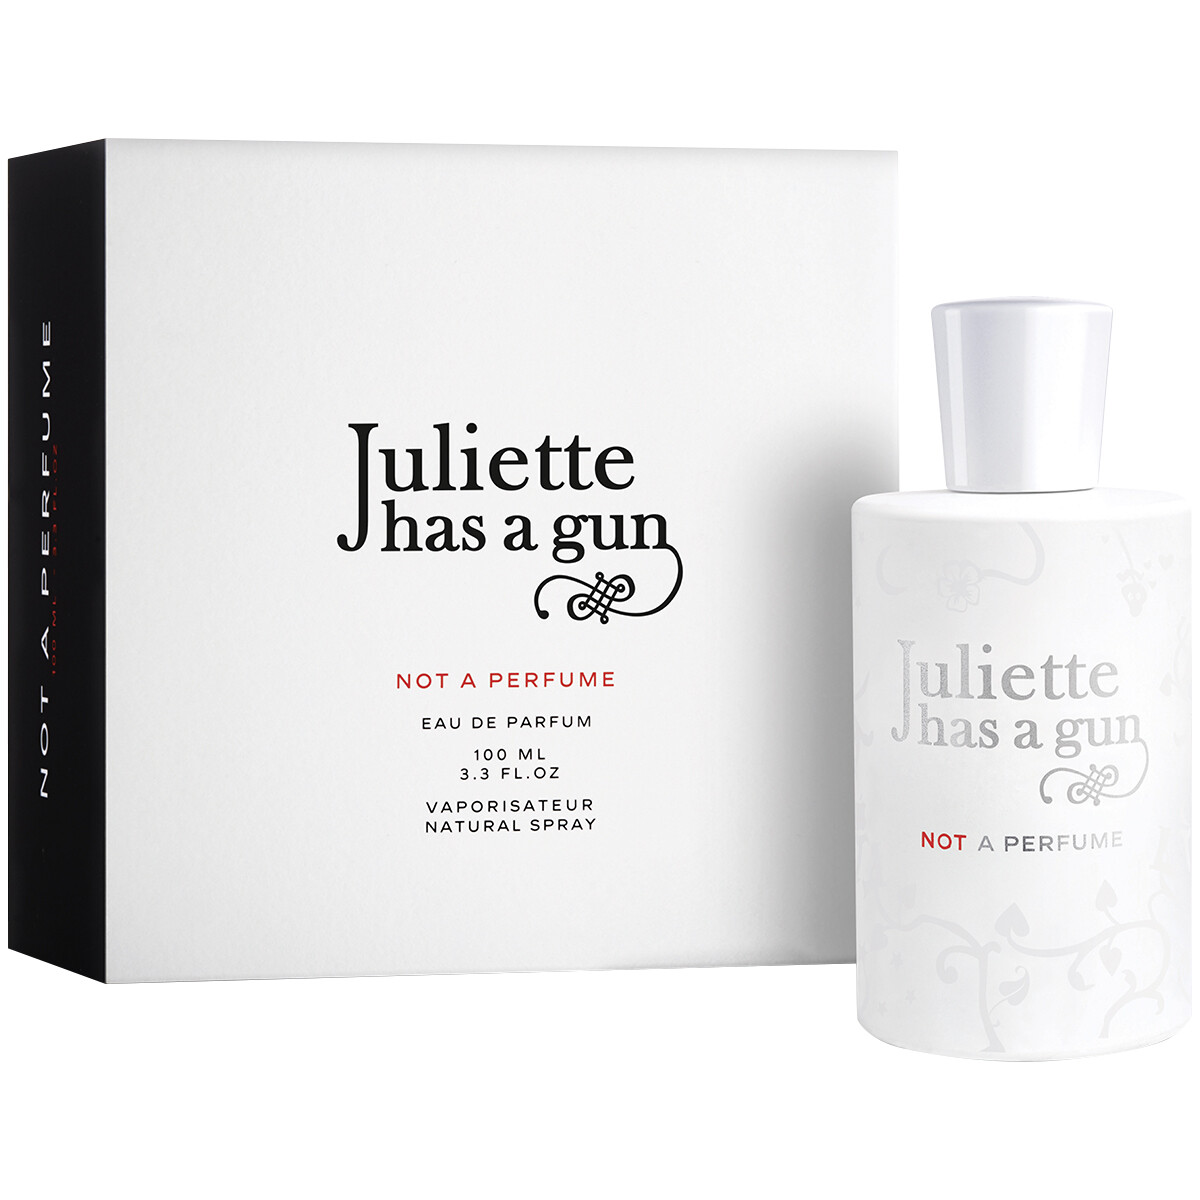 Luxus Parfum Juliette Has a Gun Not a 0ml kaufen